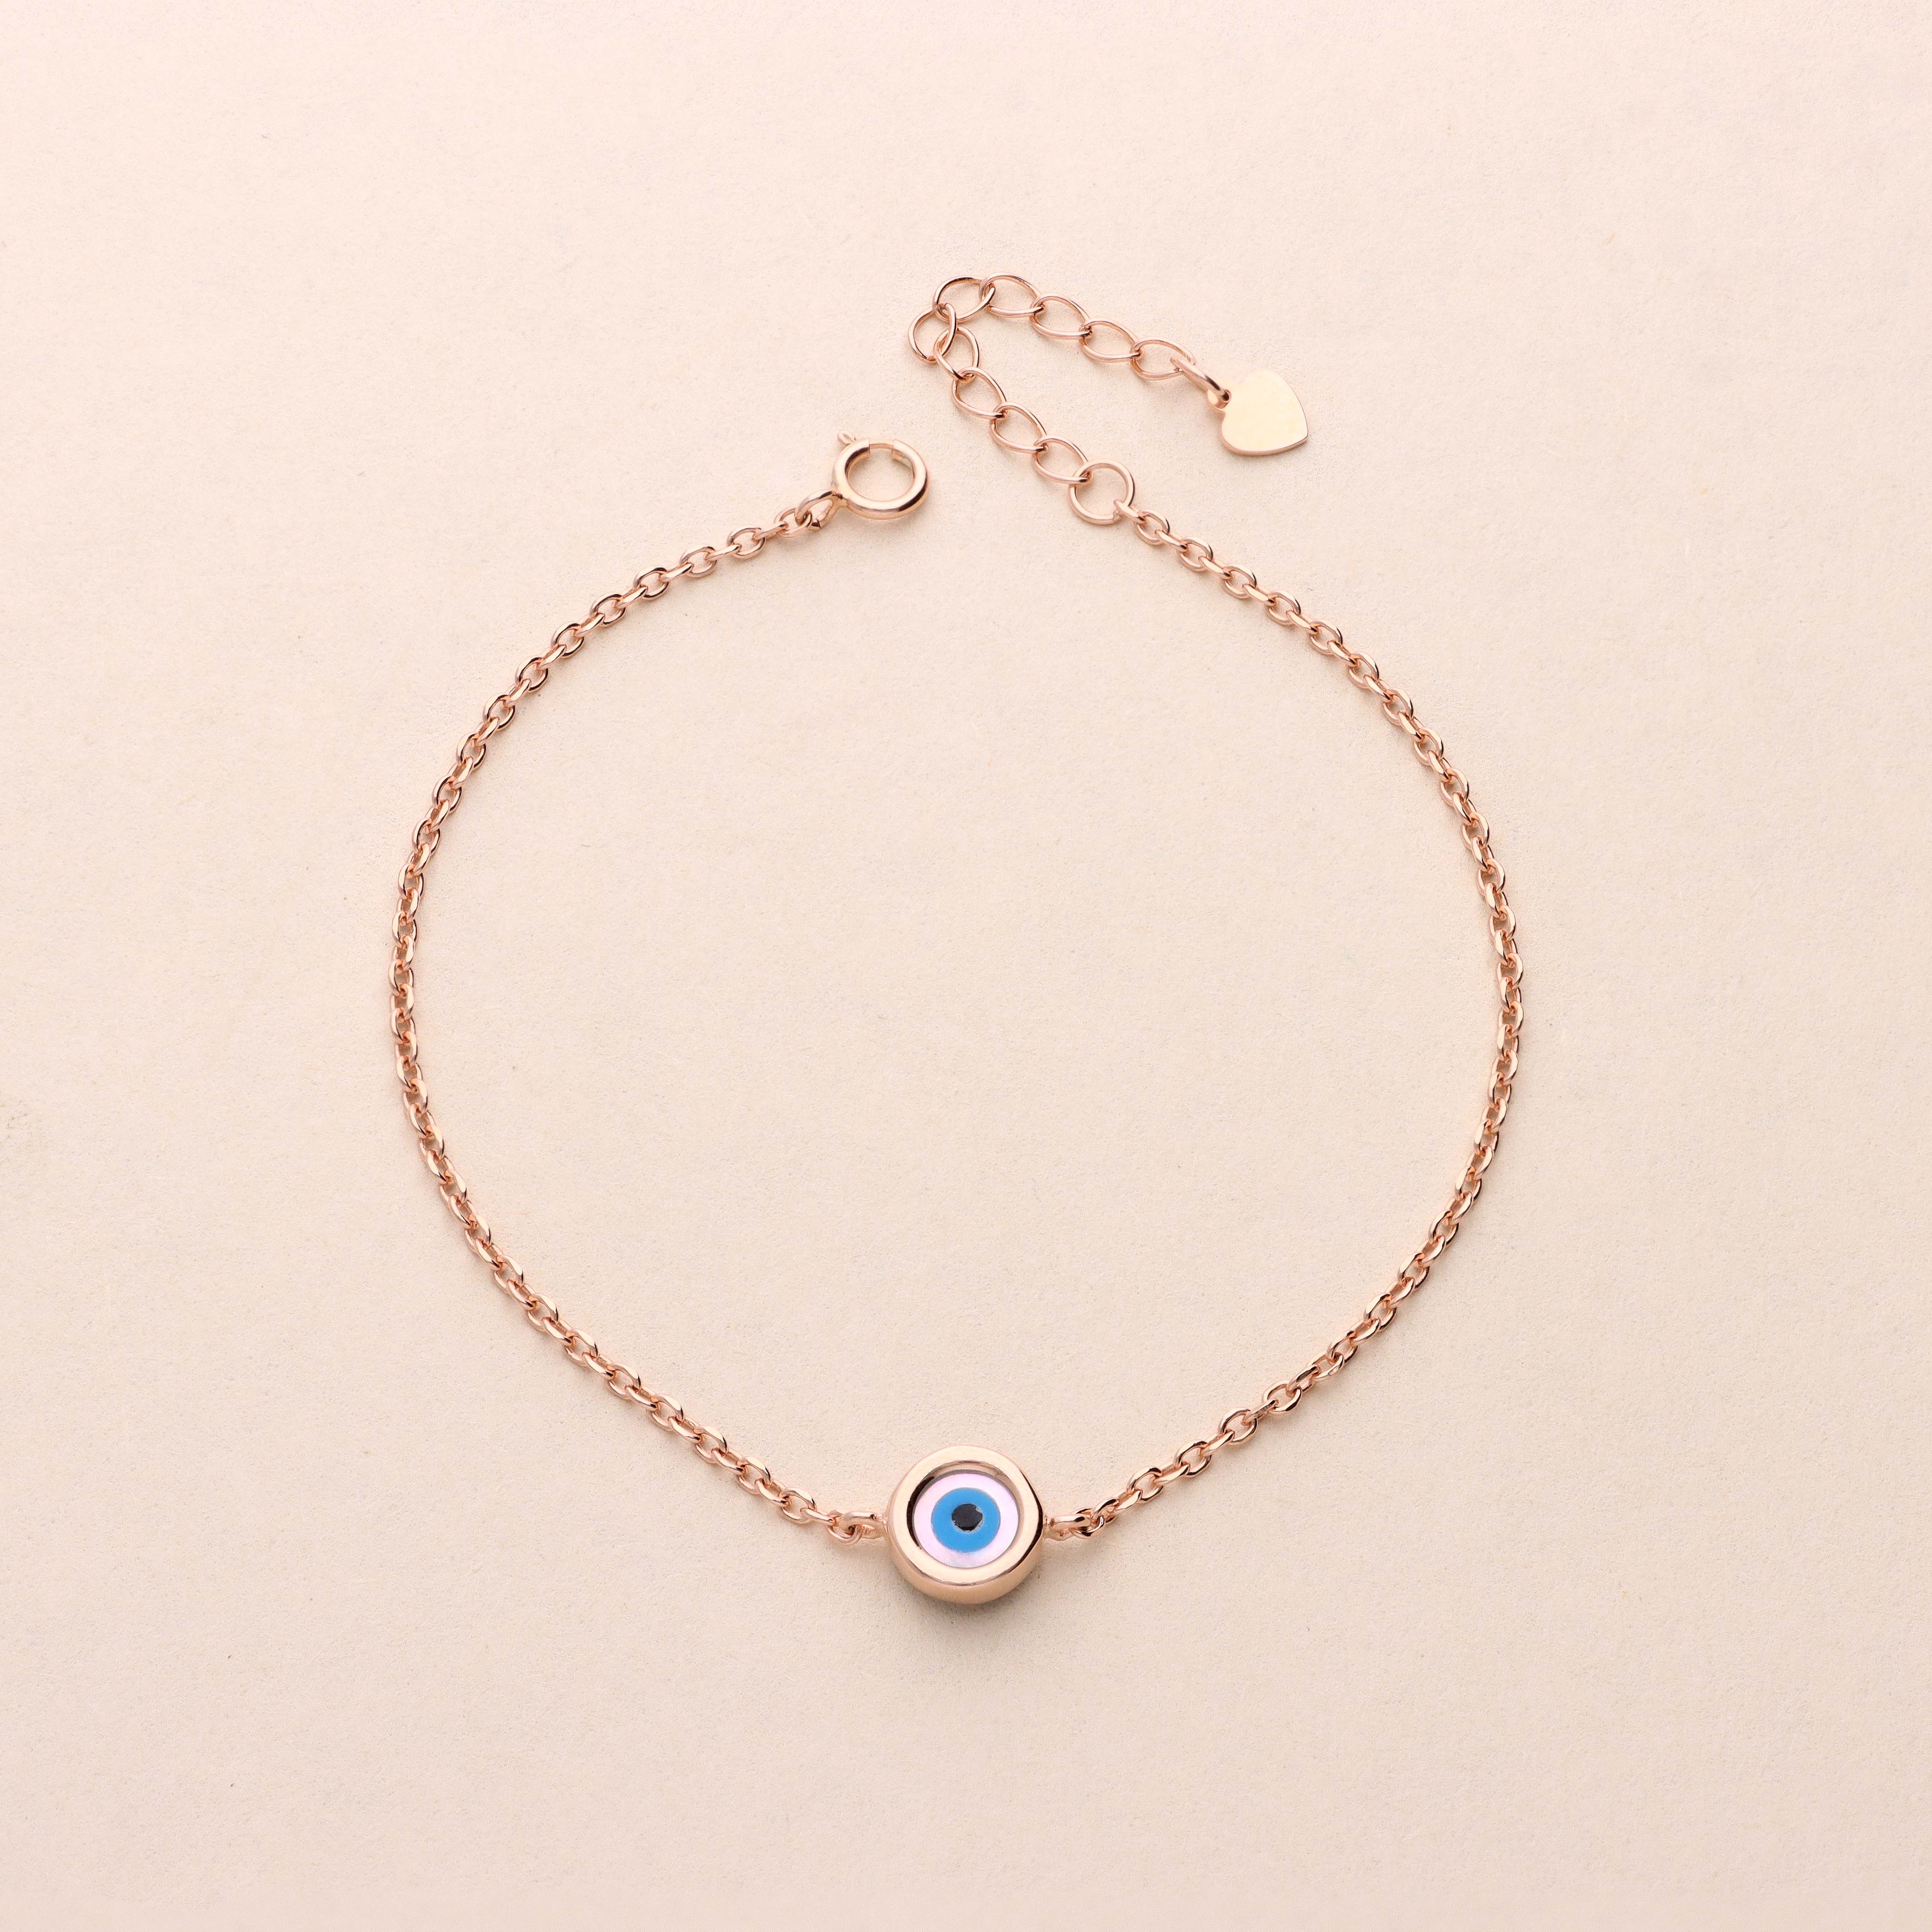 Amazon.com: 2 Pieces Set Evil Eye Bracelet-Blue Evil Eye Bead Bracelet for  Women Girls-Turkey Lucky Protection Jewelry & Accessories (Blue, Evil Eye  Bracelet) : Handmade Products